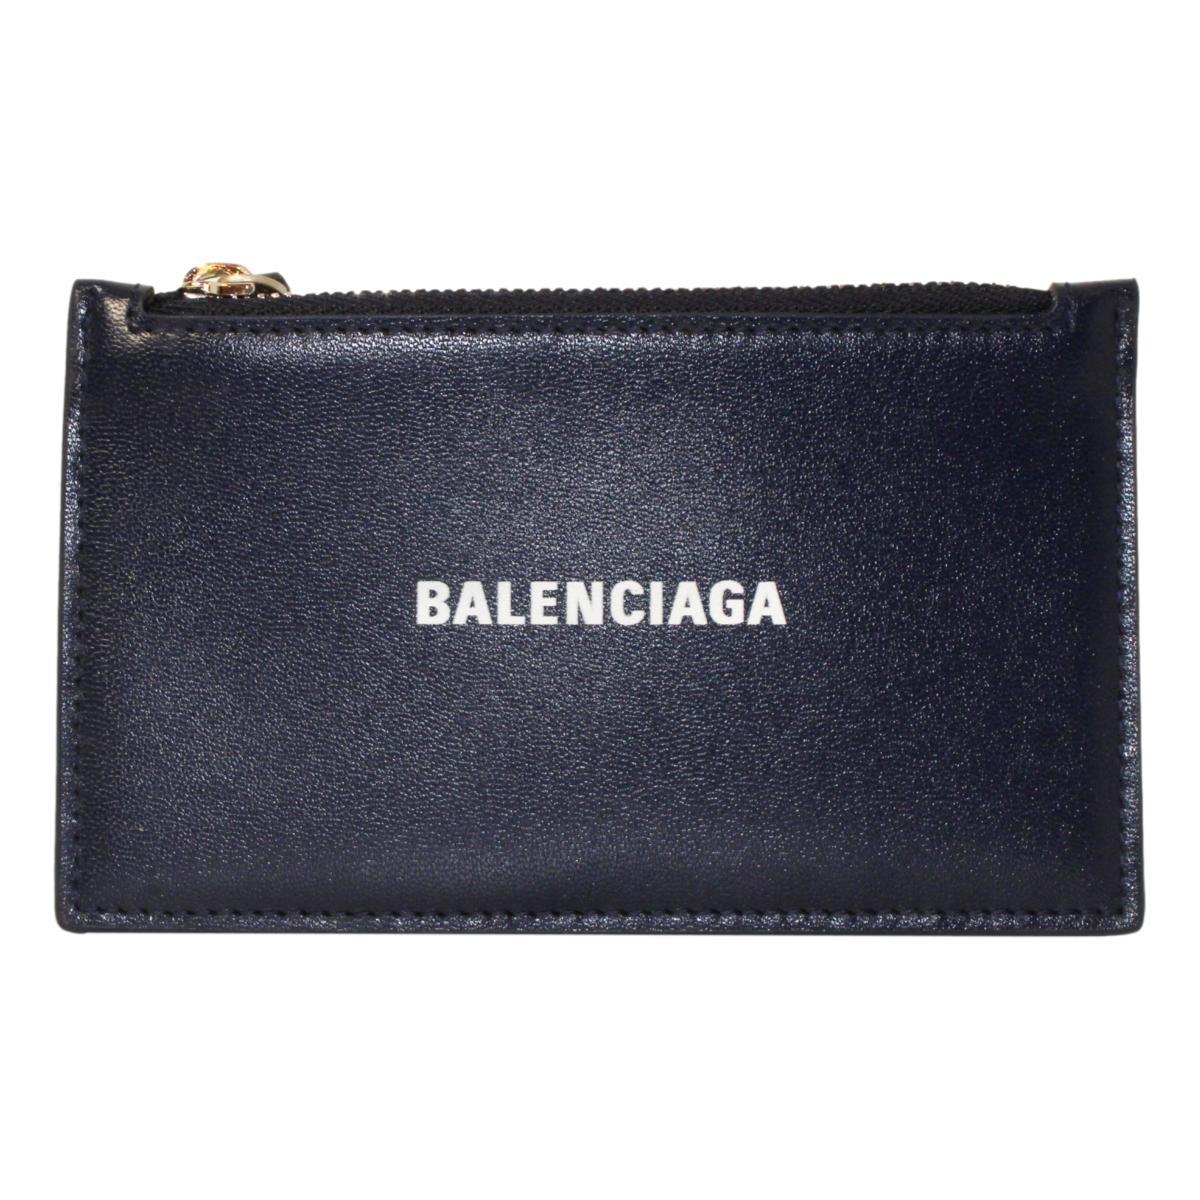 Balenciaga Cash Navy Leather Large Coin Card Holder Wallet 594311 - LUXURYMRKT